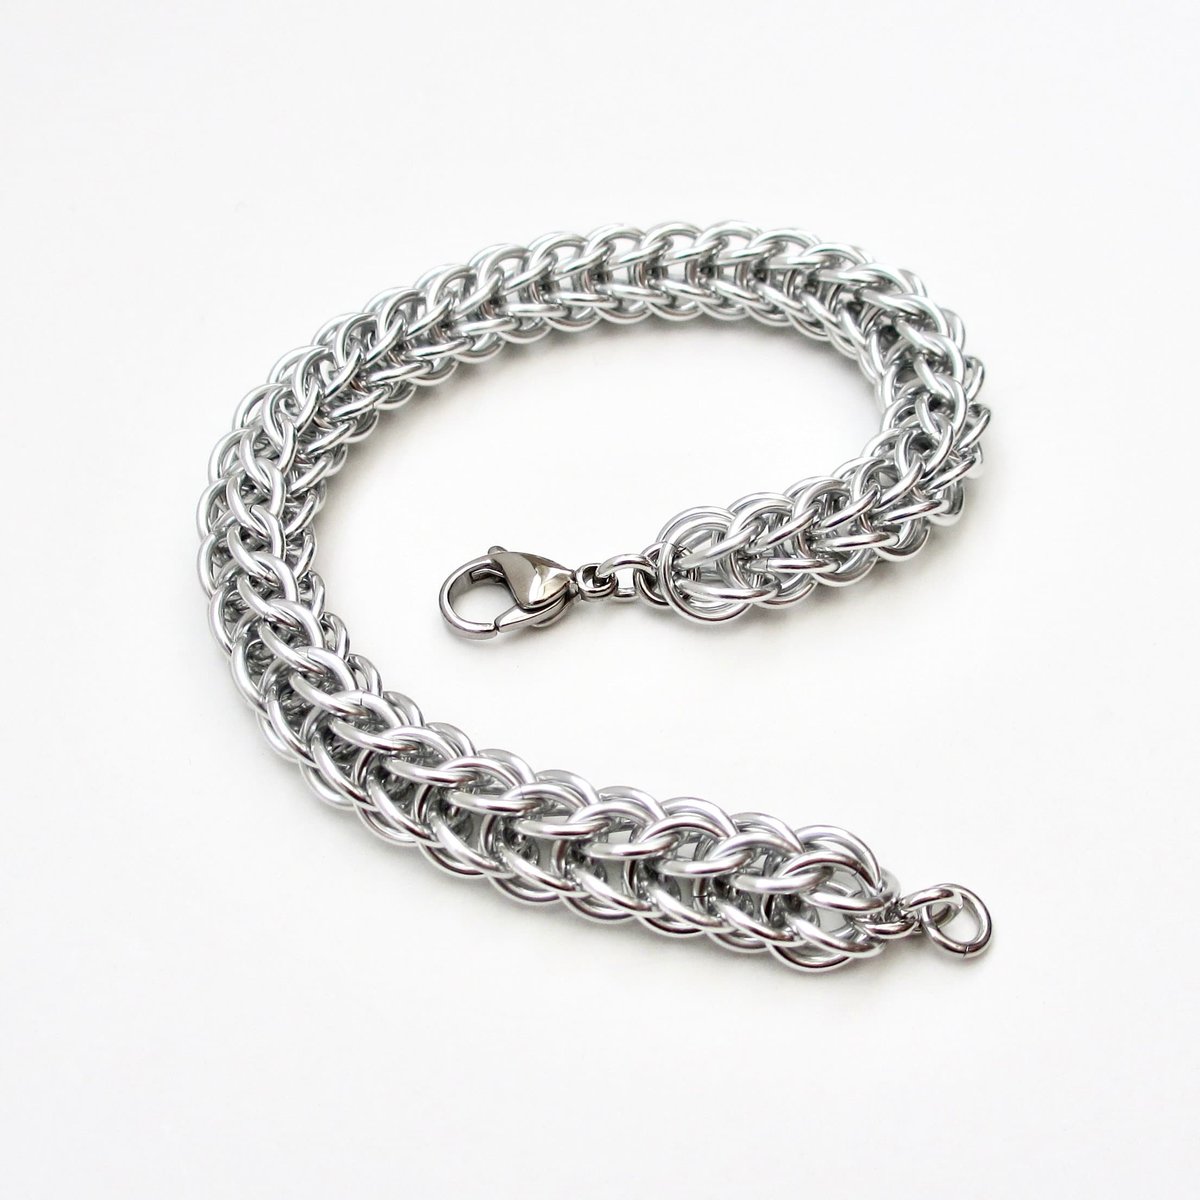 Chainmail full Persian bracelet, silver aluminum jewelry - lightweight, non-tarnish